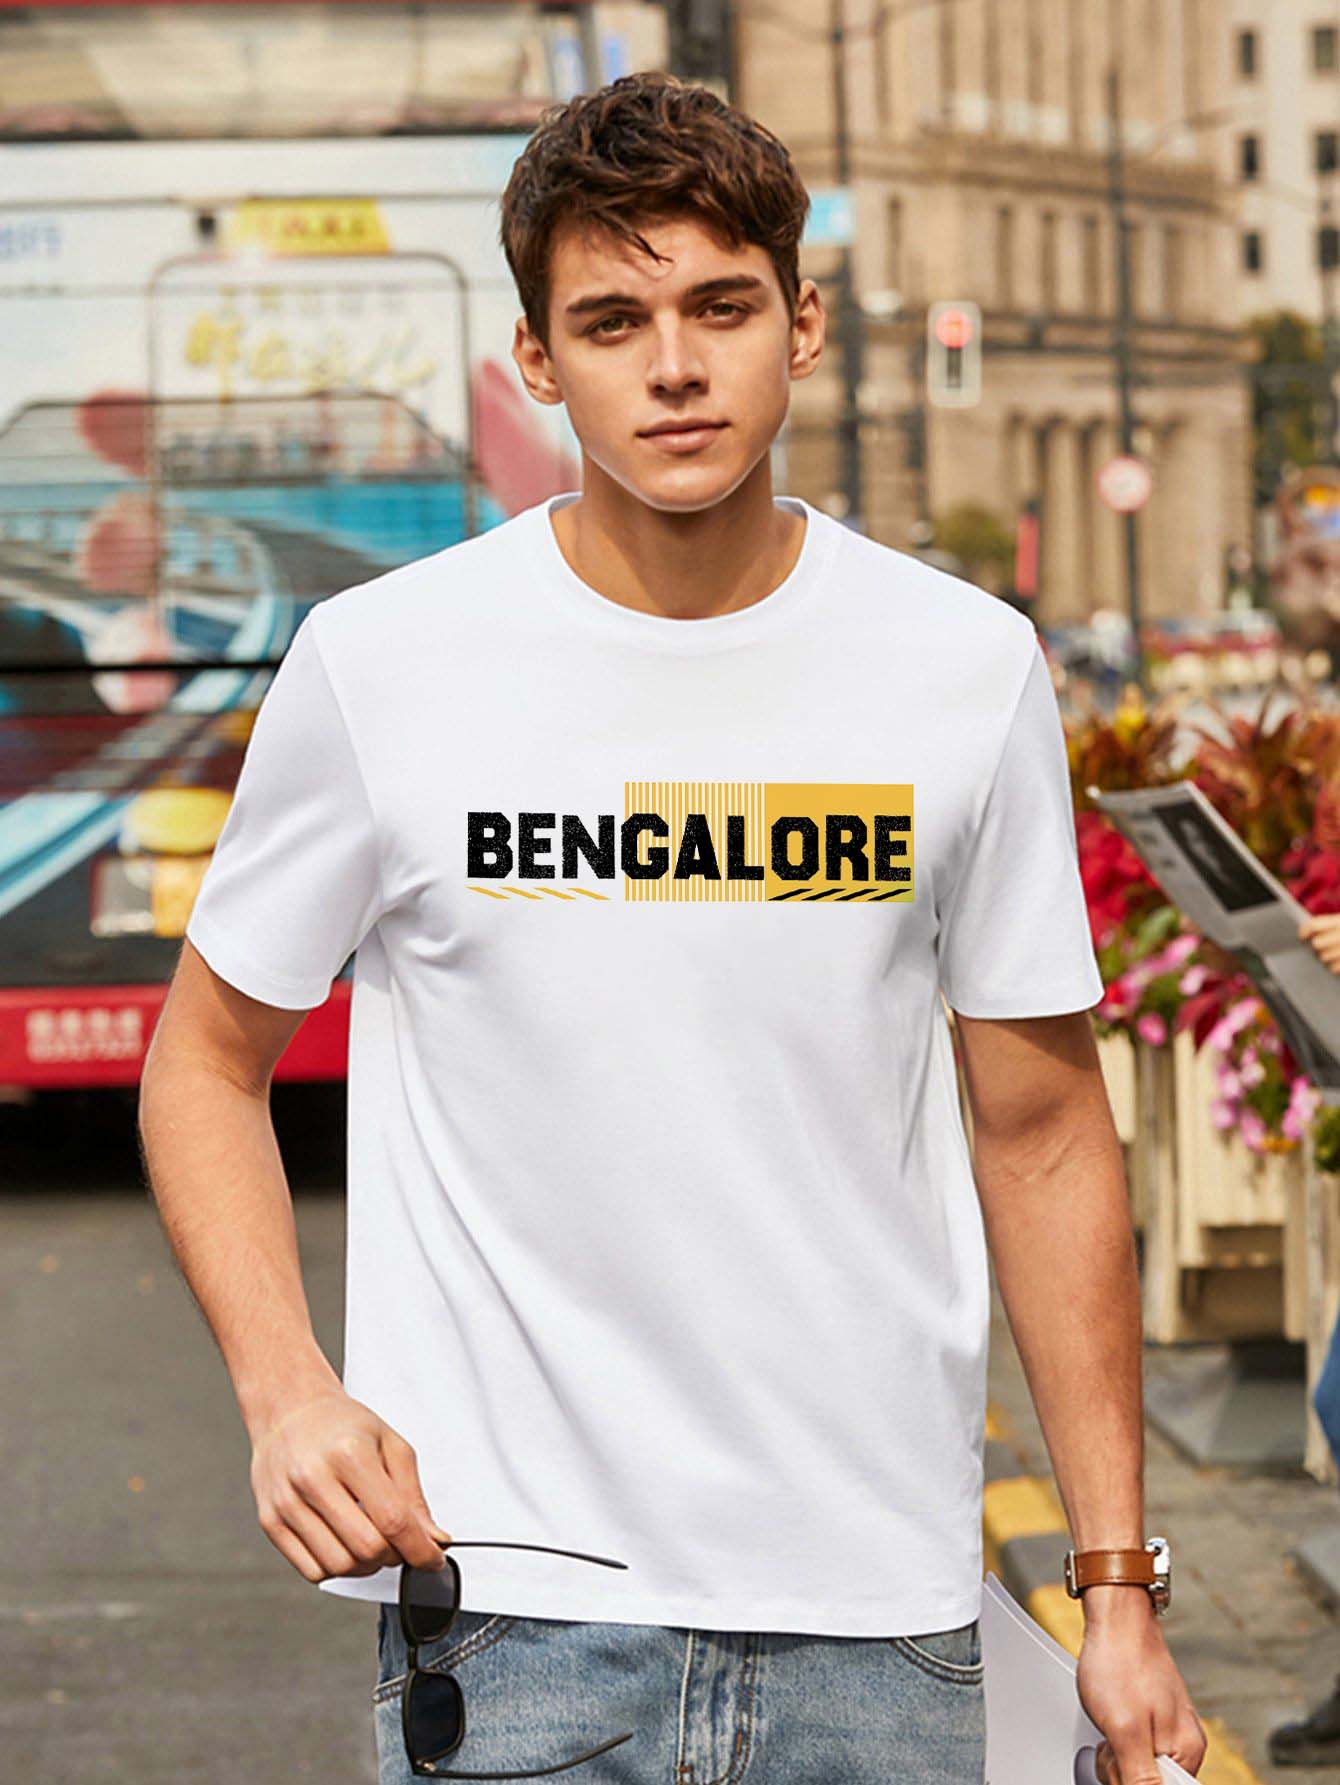 Bengalore T shirt White